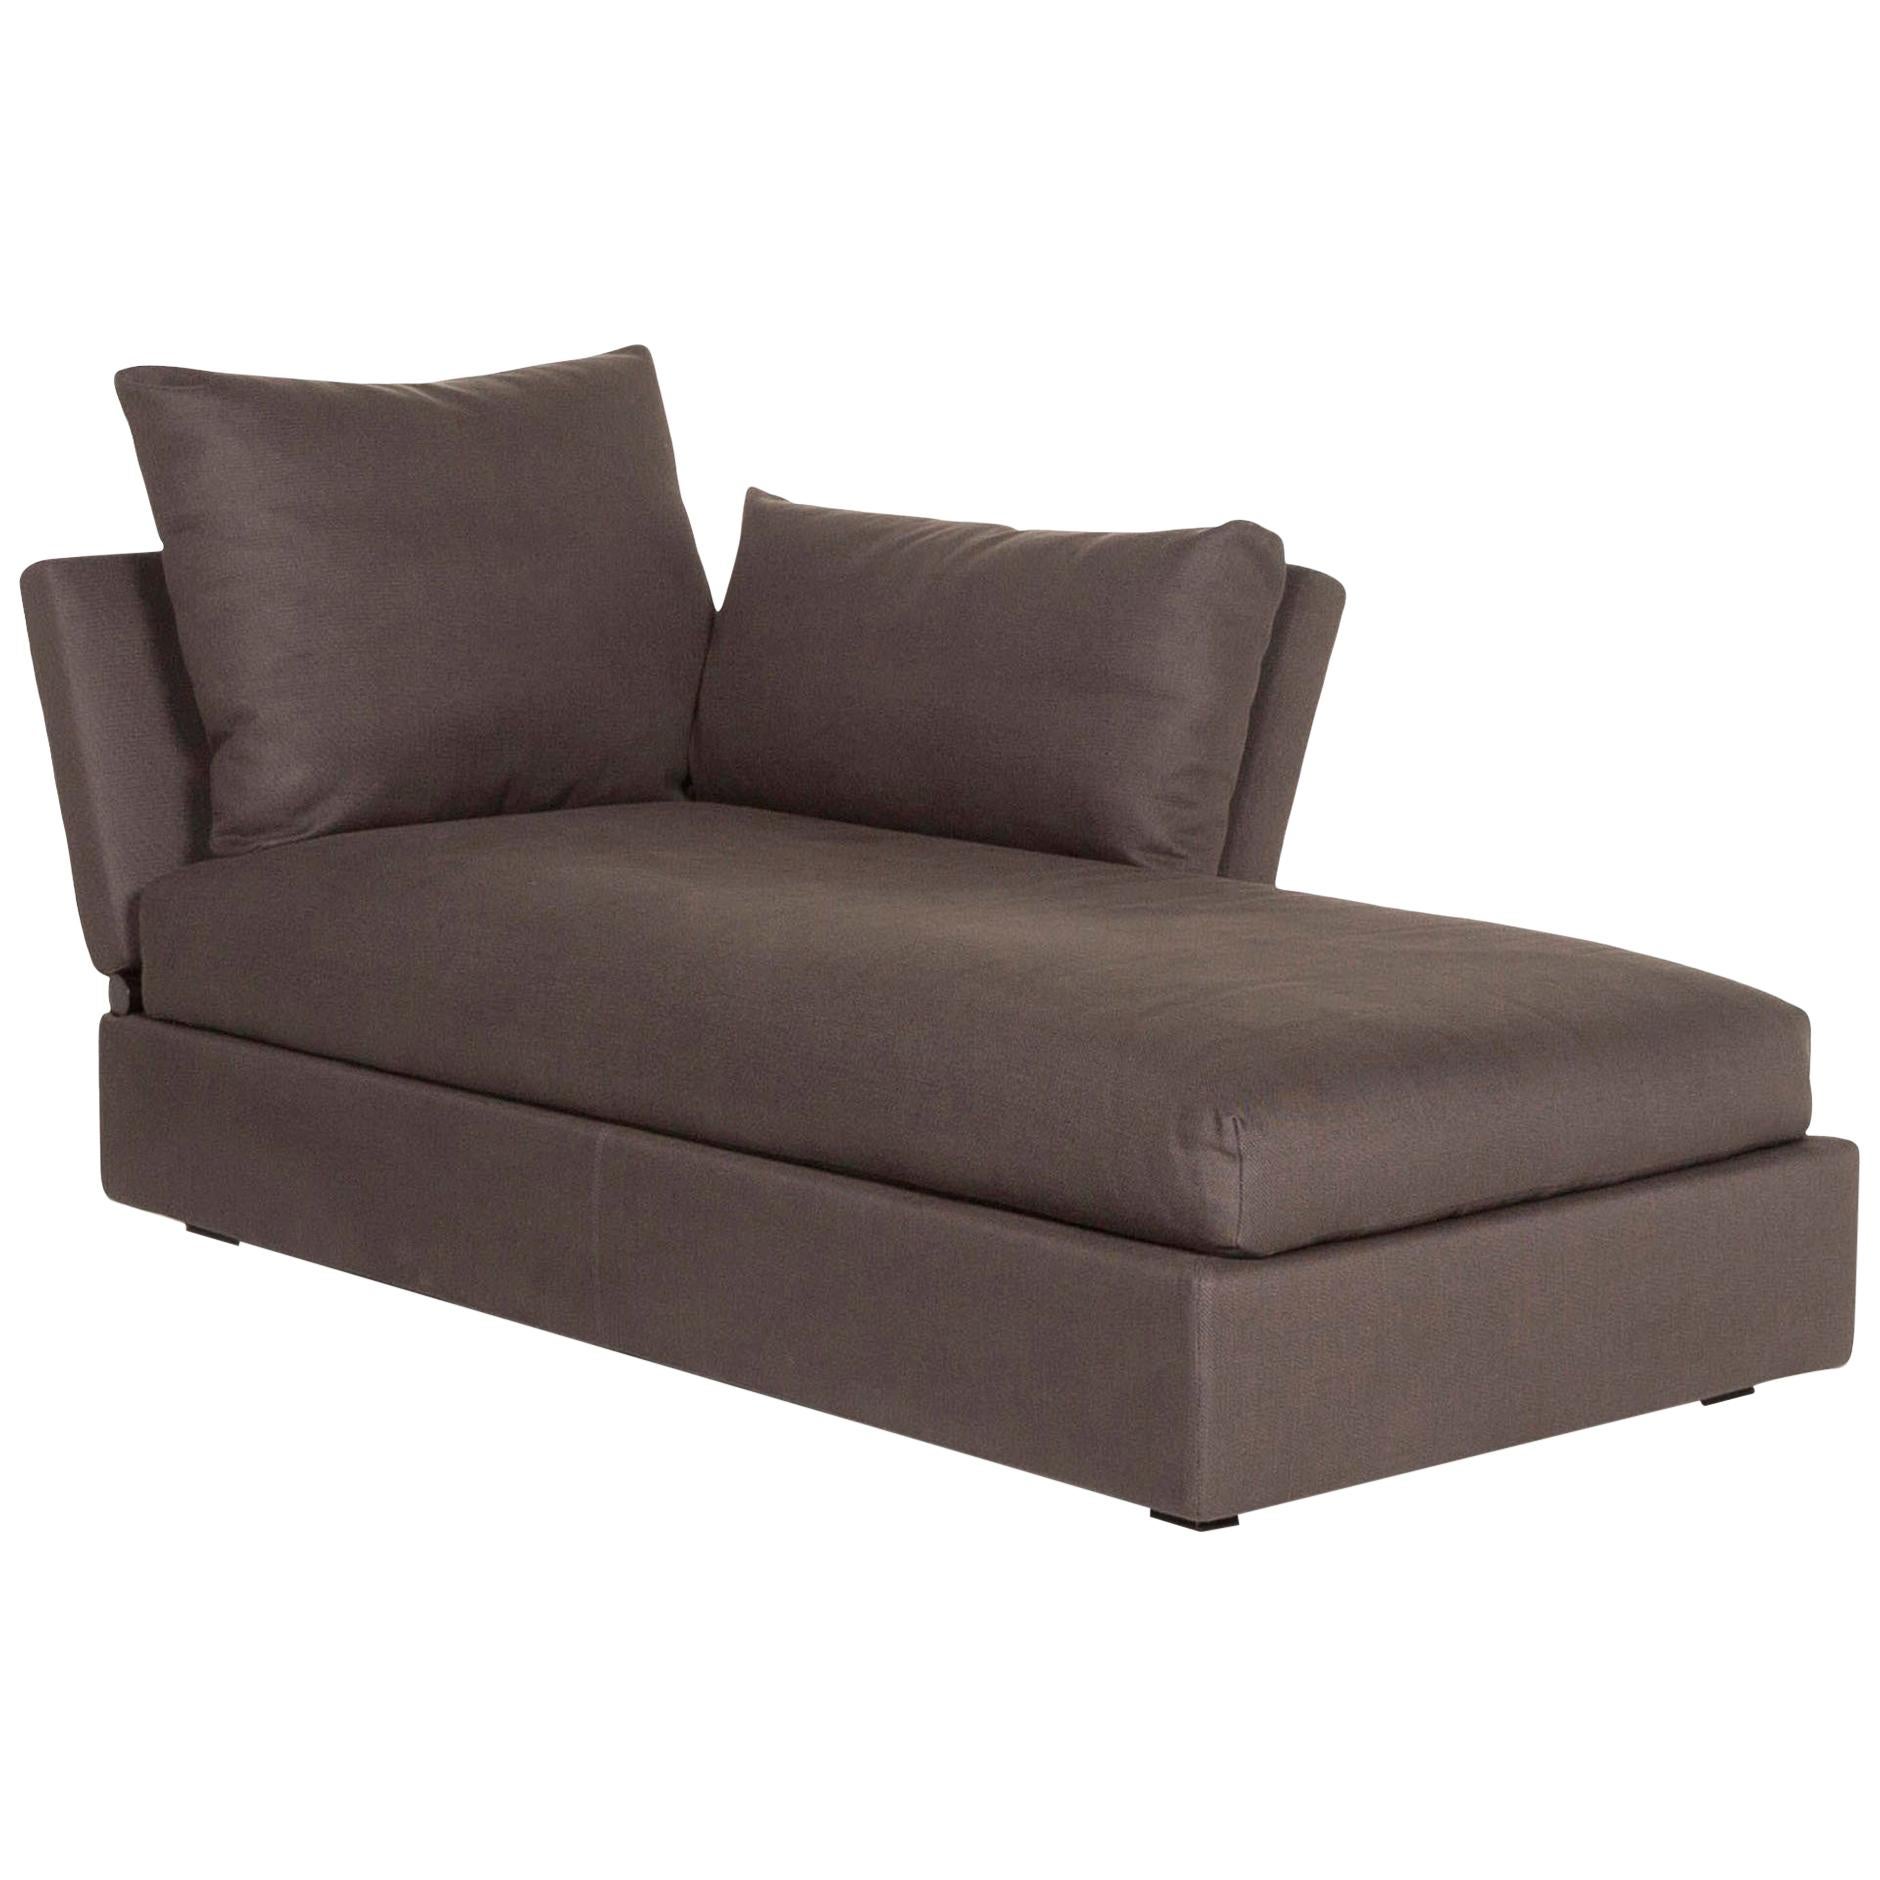 Flexform Fabric Sofa Brown Dark Brown Two-Seat Sleep Function Function Couch